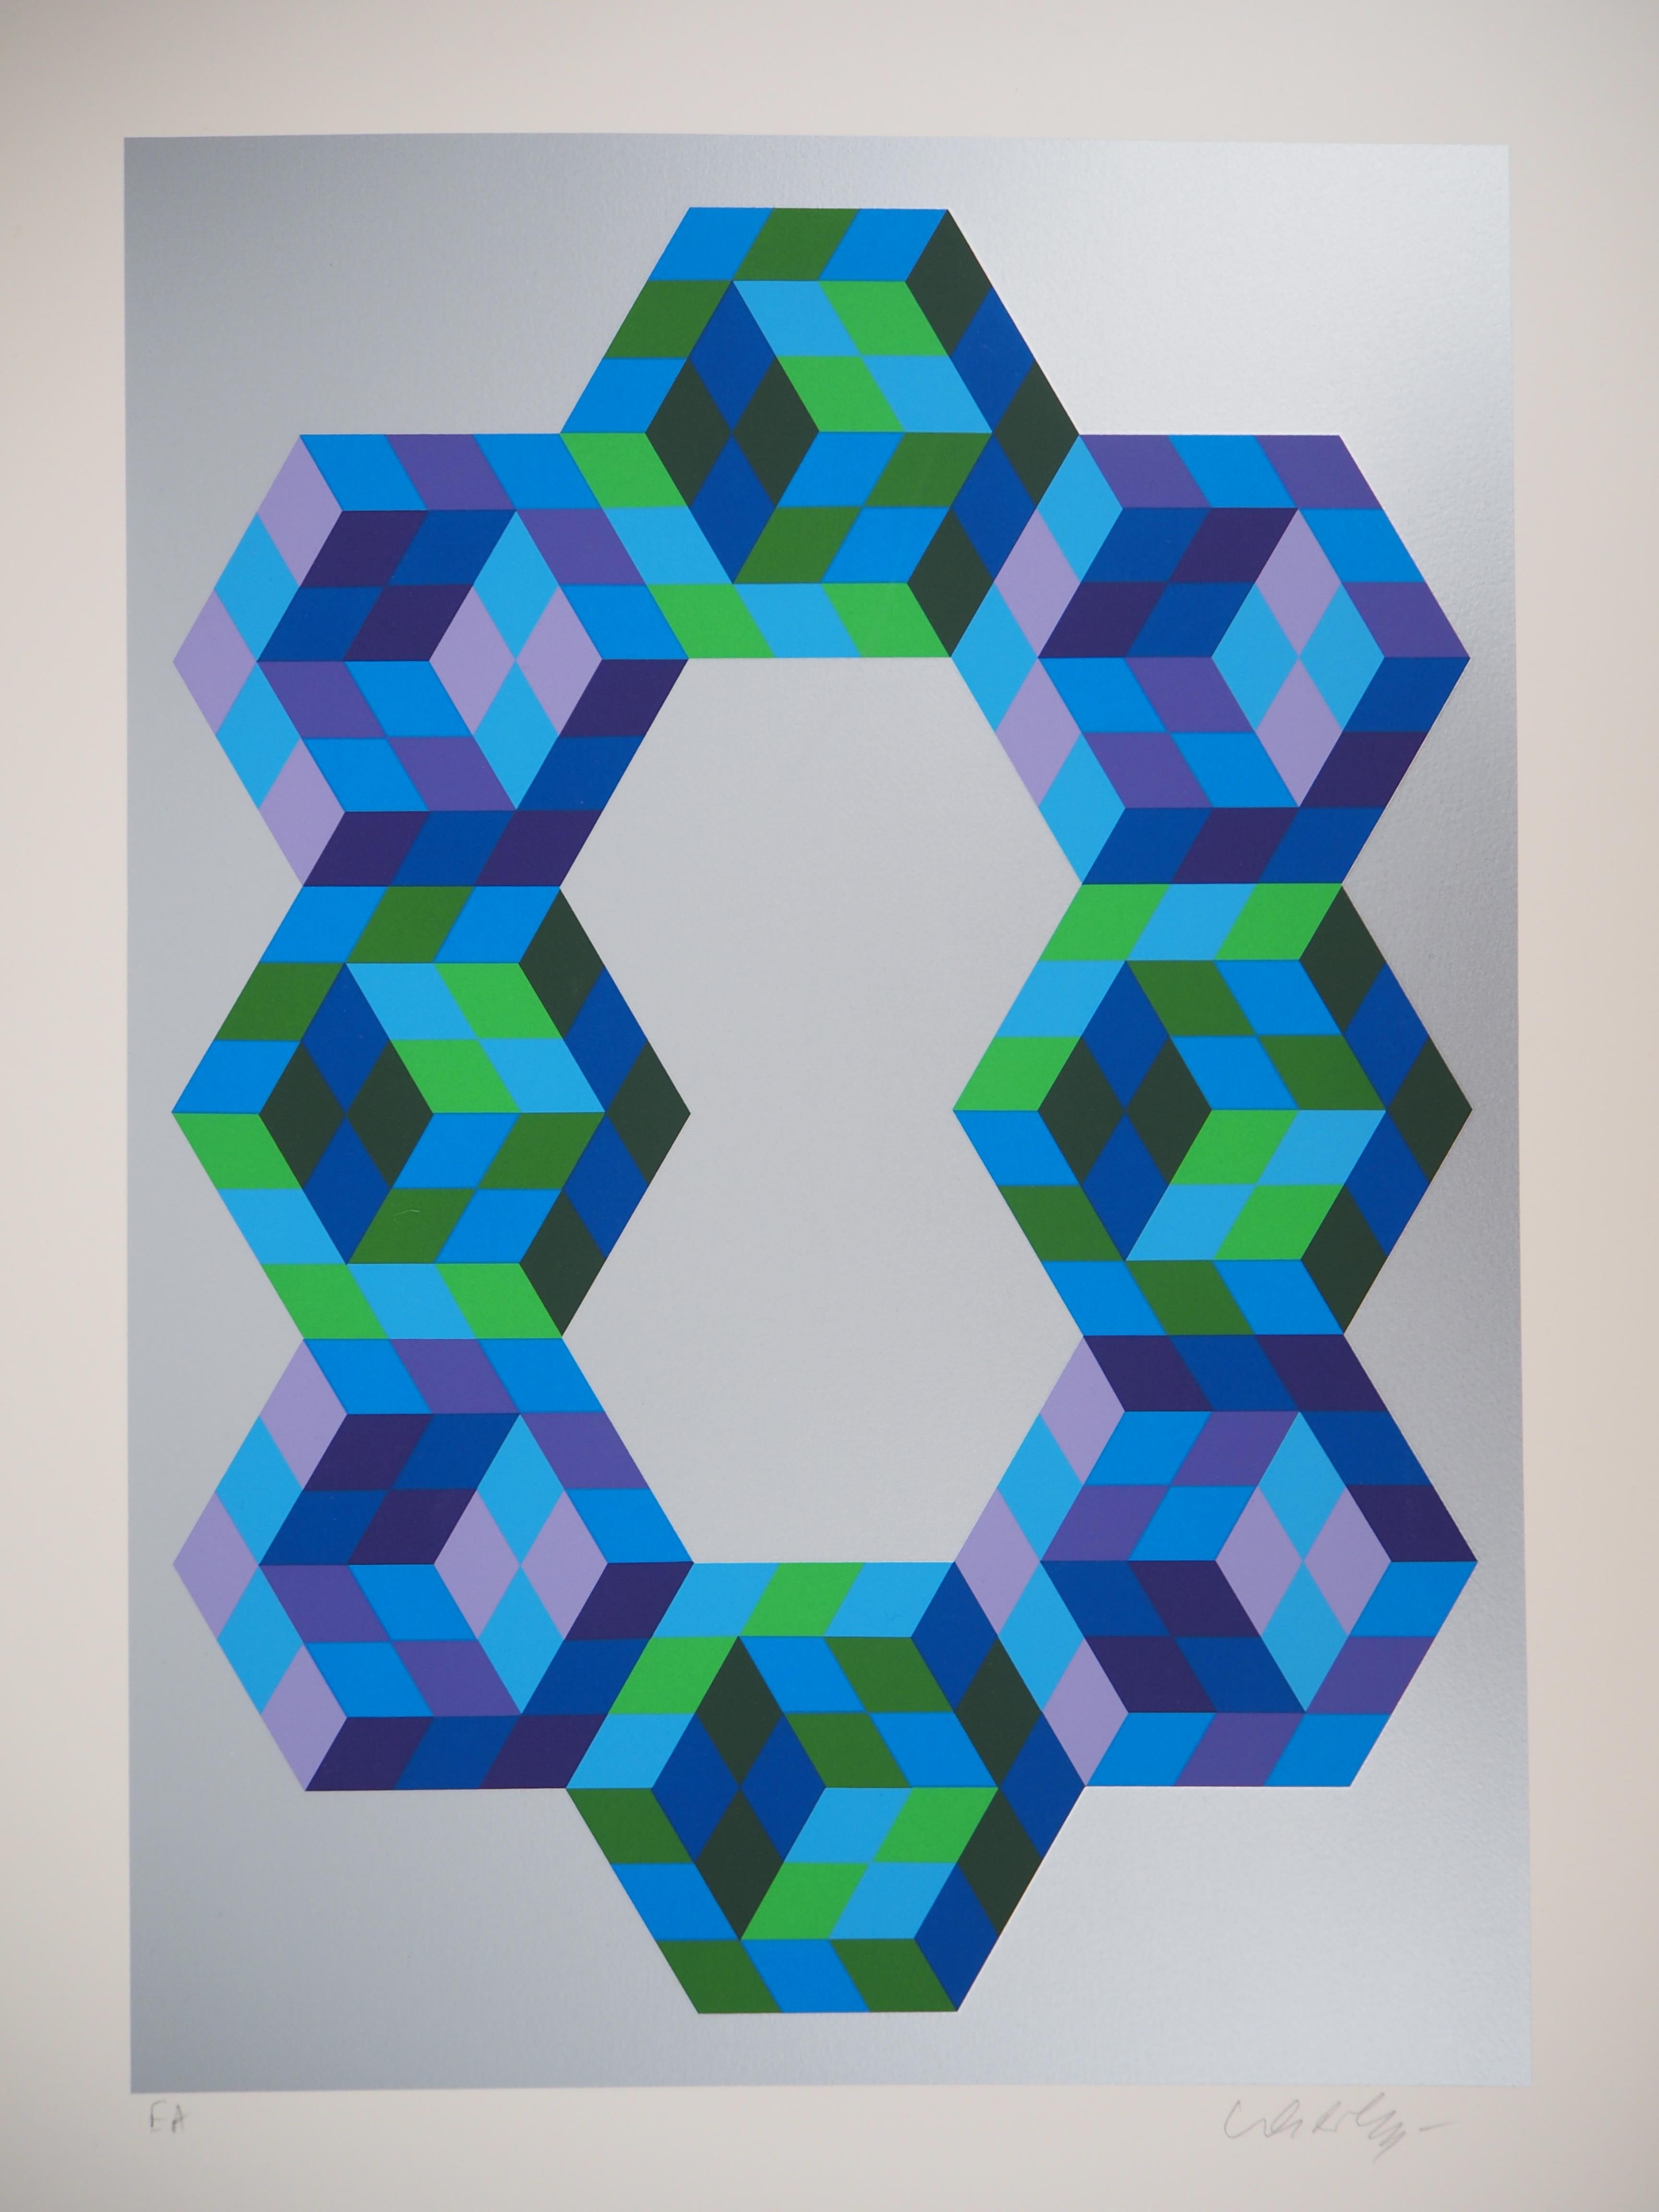 Victor VASARELY
Eight Hexagons, c. 1970

Original screen print
Handsigned in pencil
Justified EA (artist proof)
On vellum 72 x 54 cm (c. 29 x 22 in)

Excellent condition